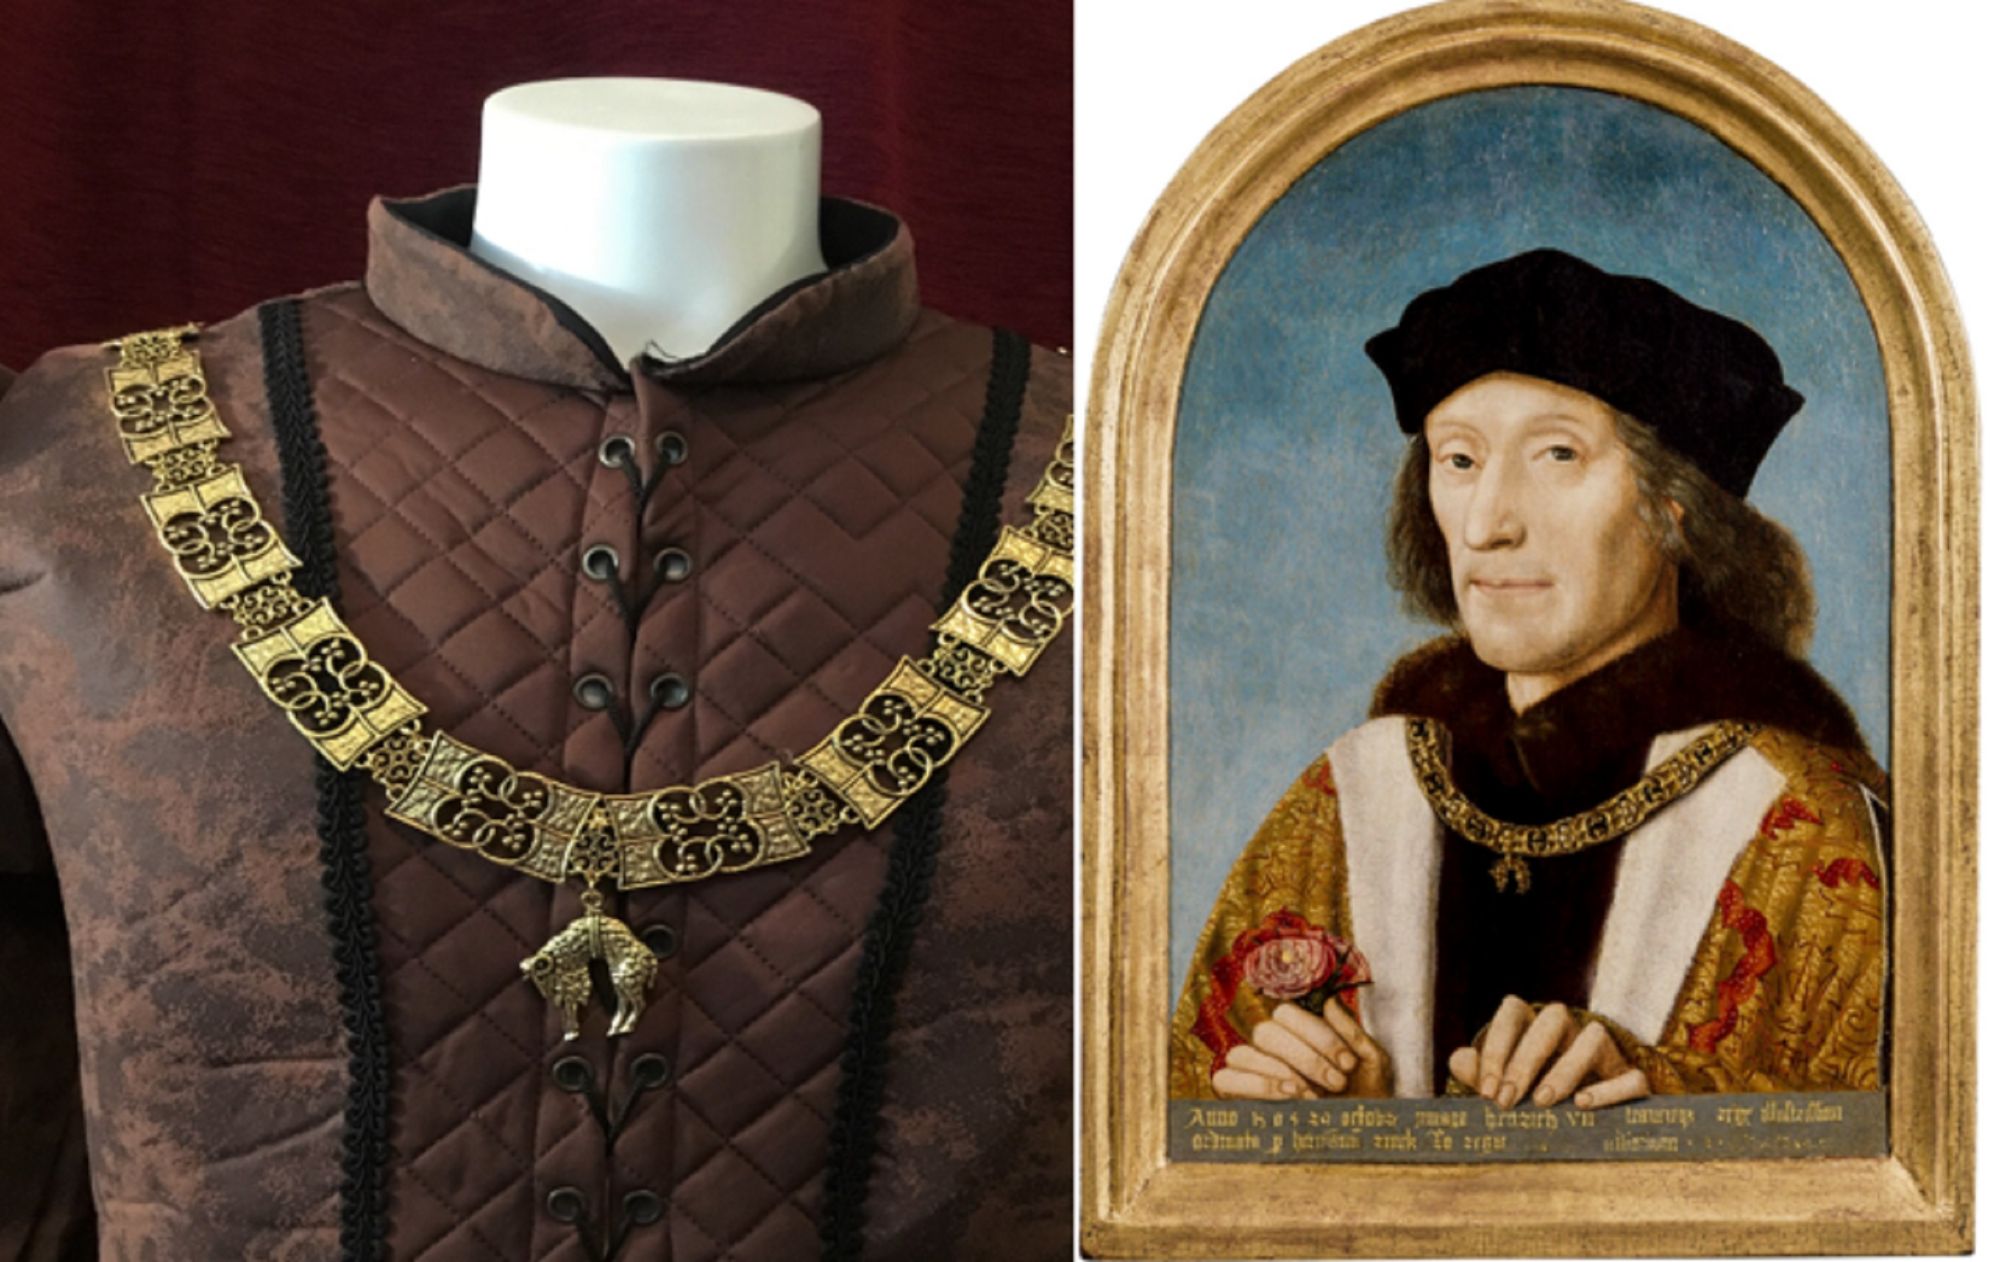 Henry VII fleece compare